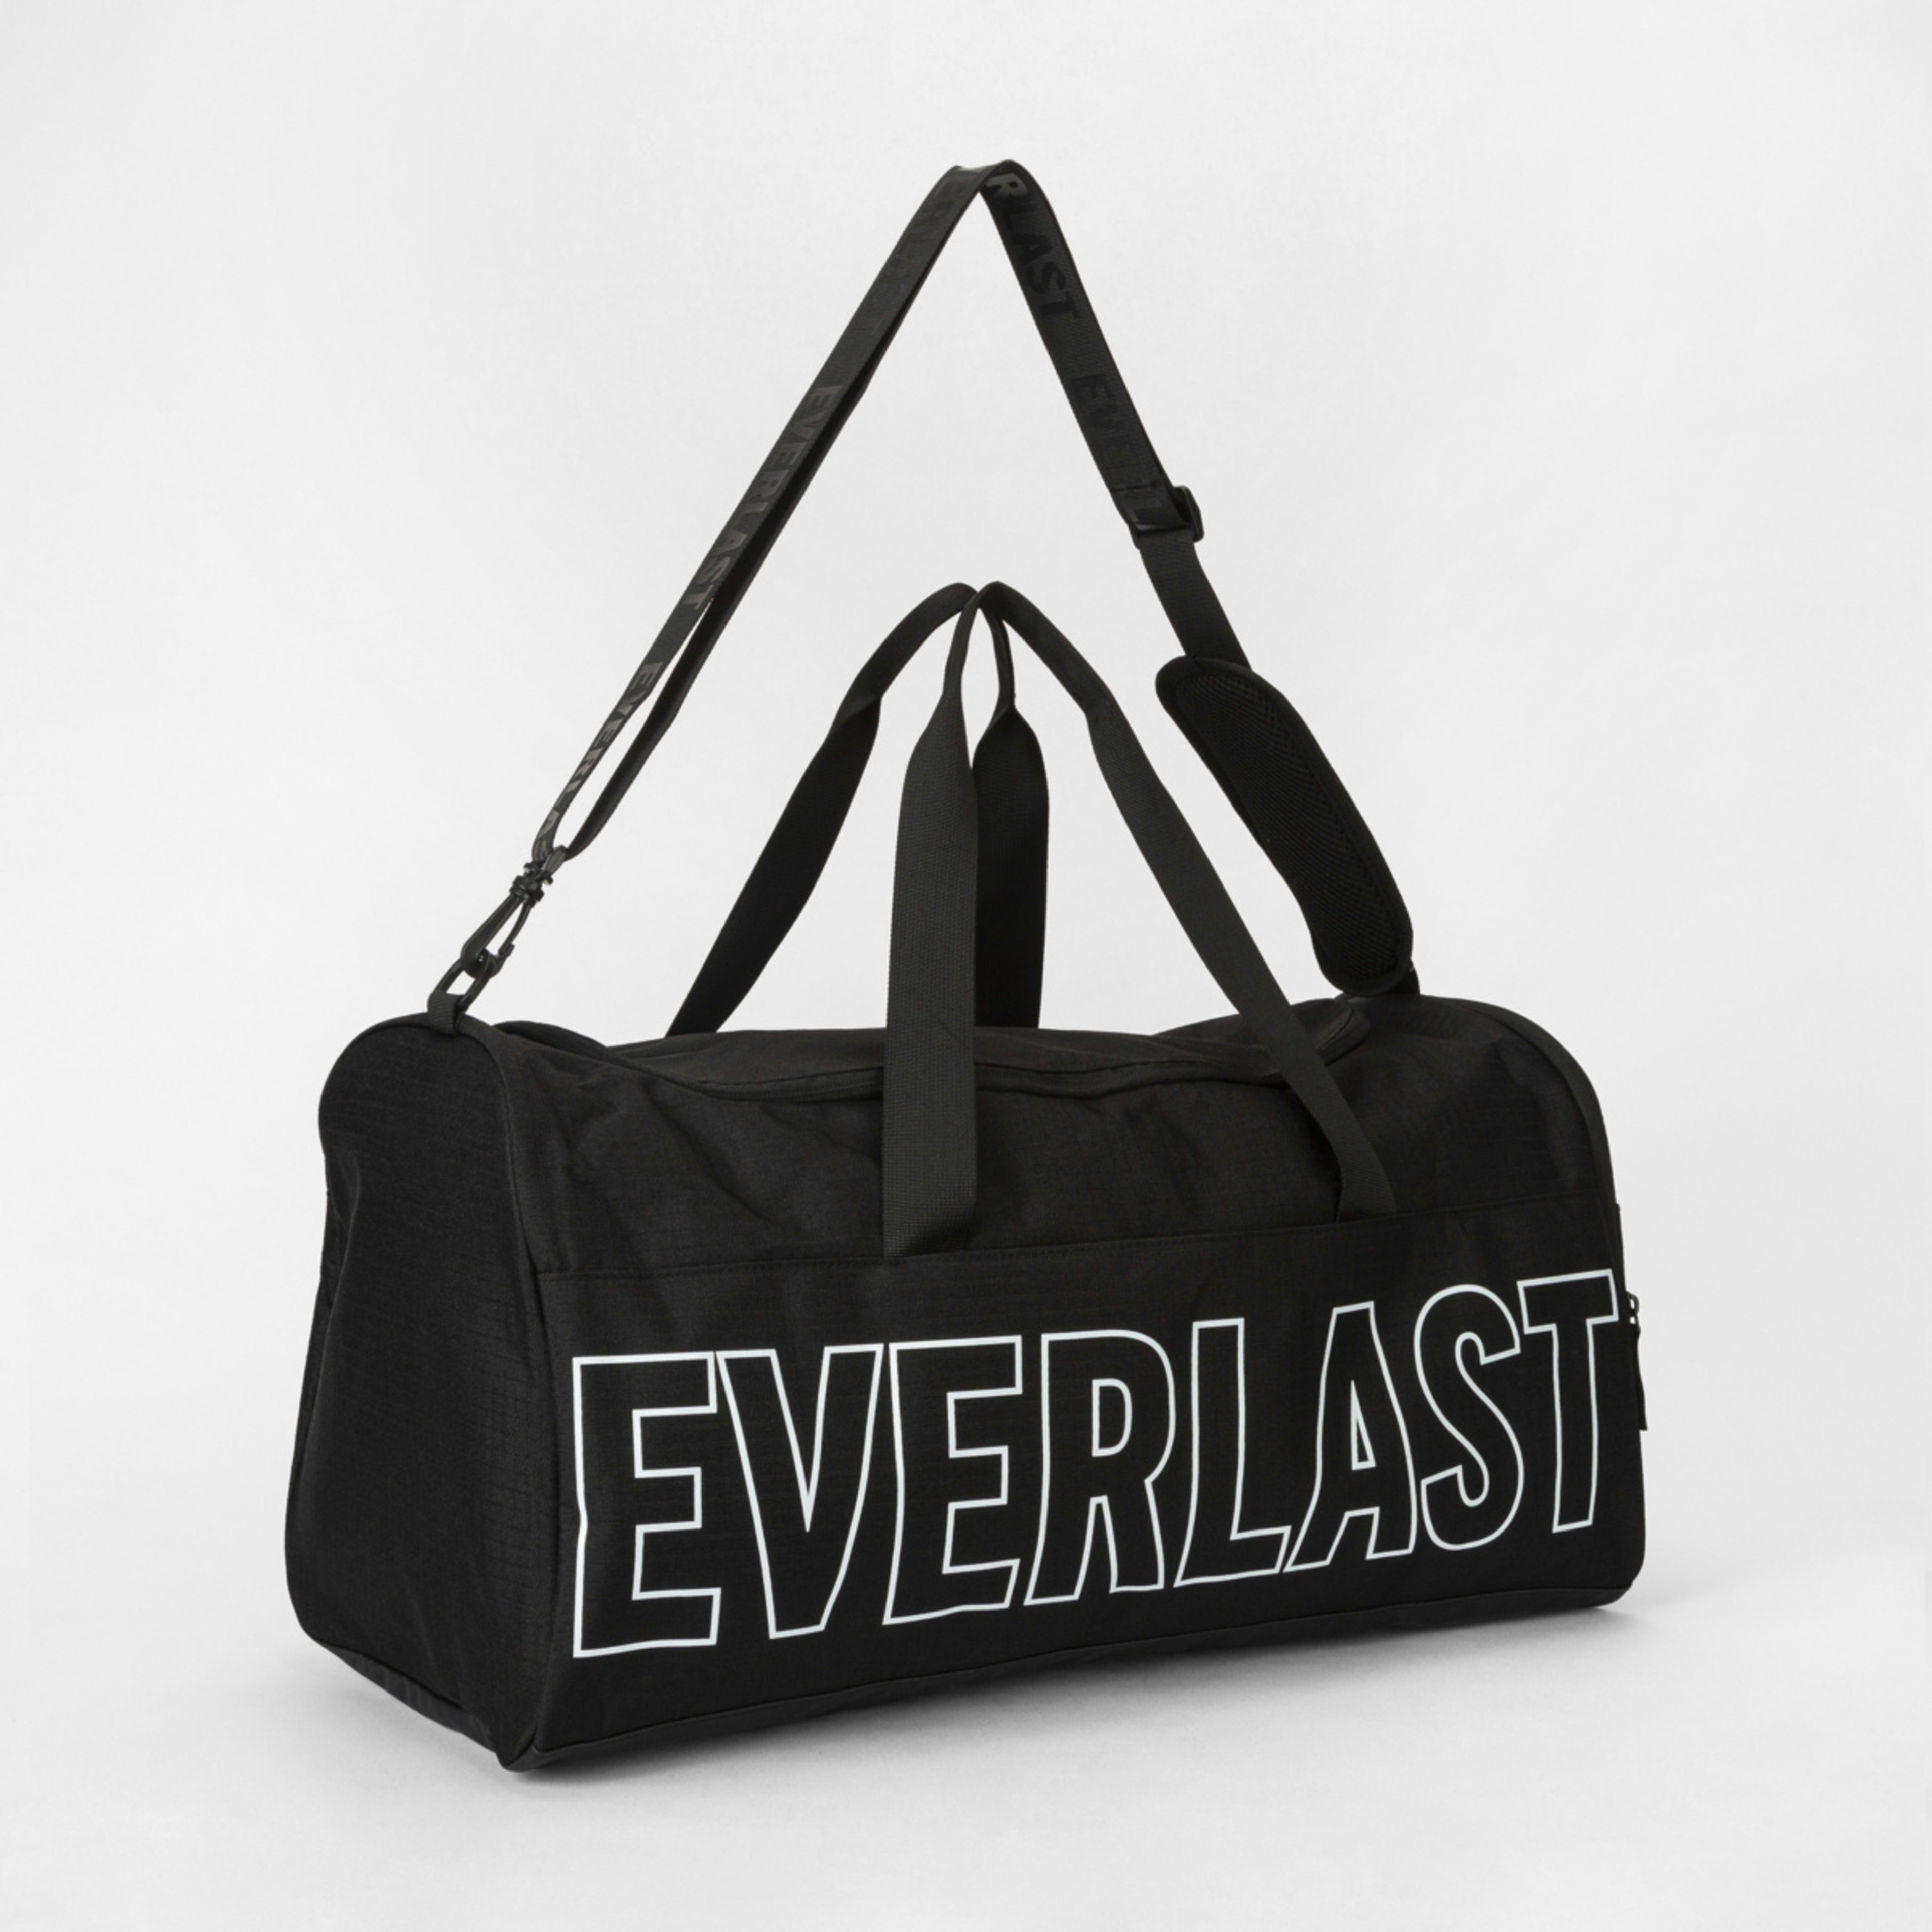 Active Everlast Colorado Duffle Bag - Black - Kmart